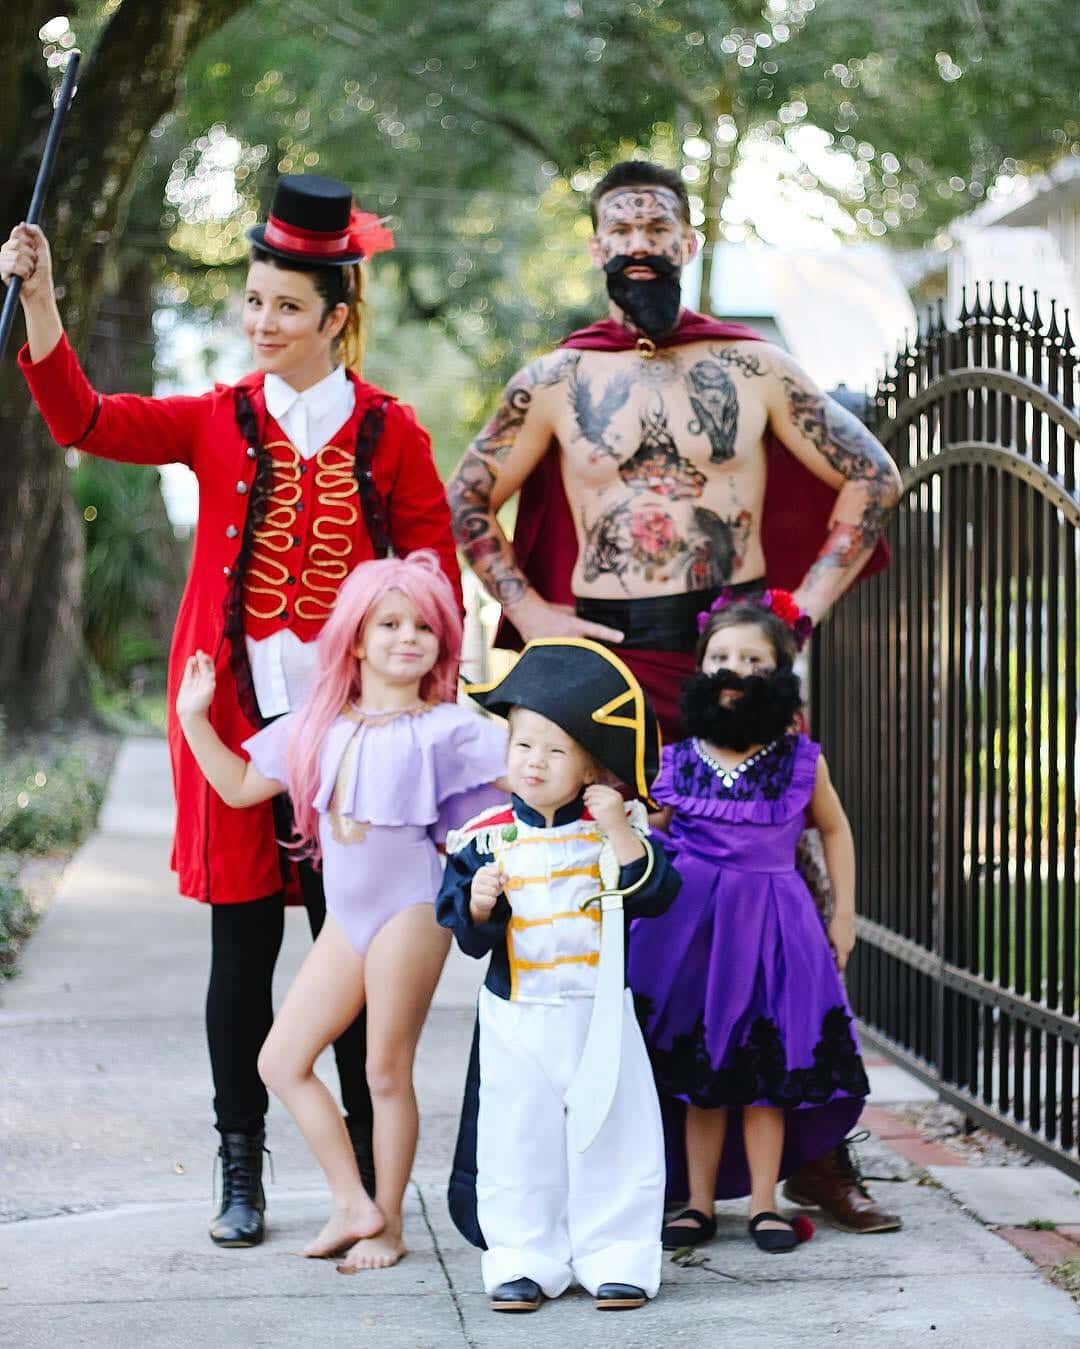 19 DIY Circus Costume Ideas for Halloween - Best Circus Halloween Costumes